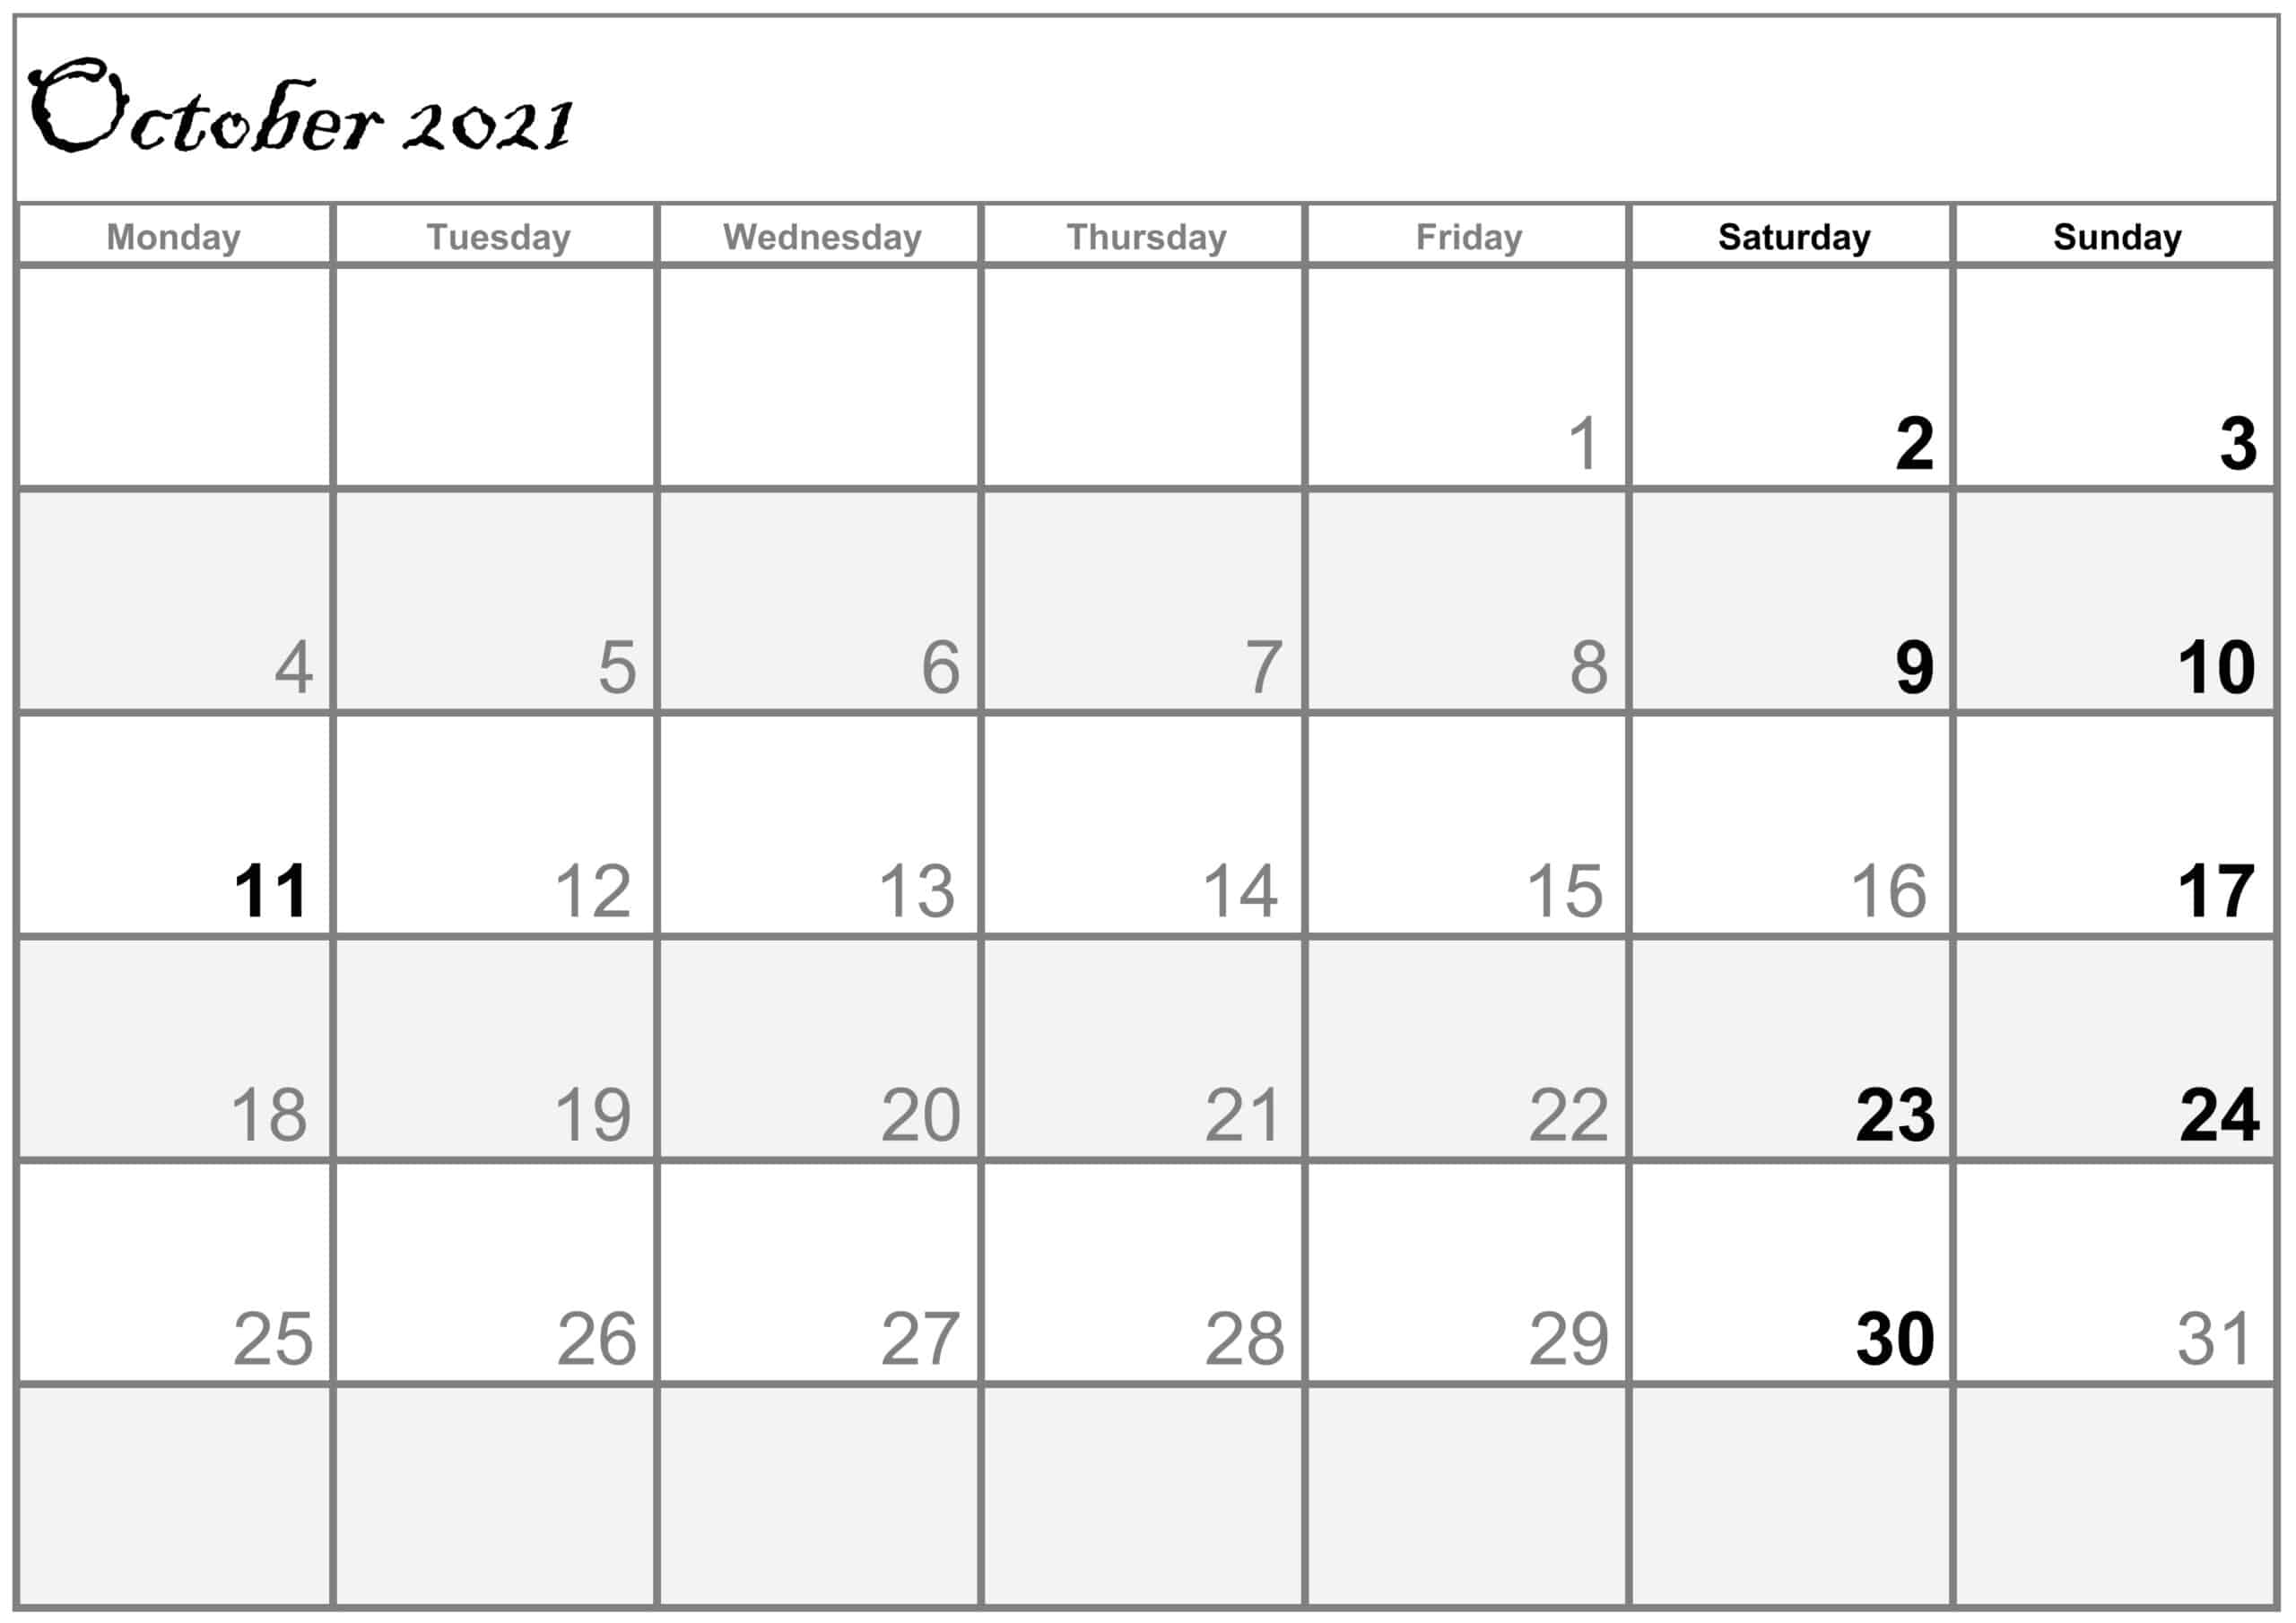 Excel October 2021 Calendar free